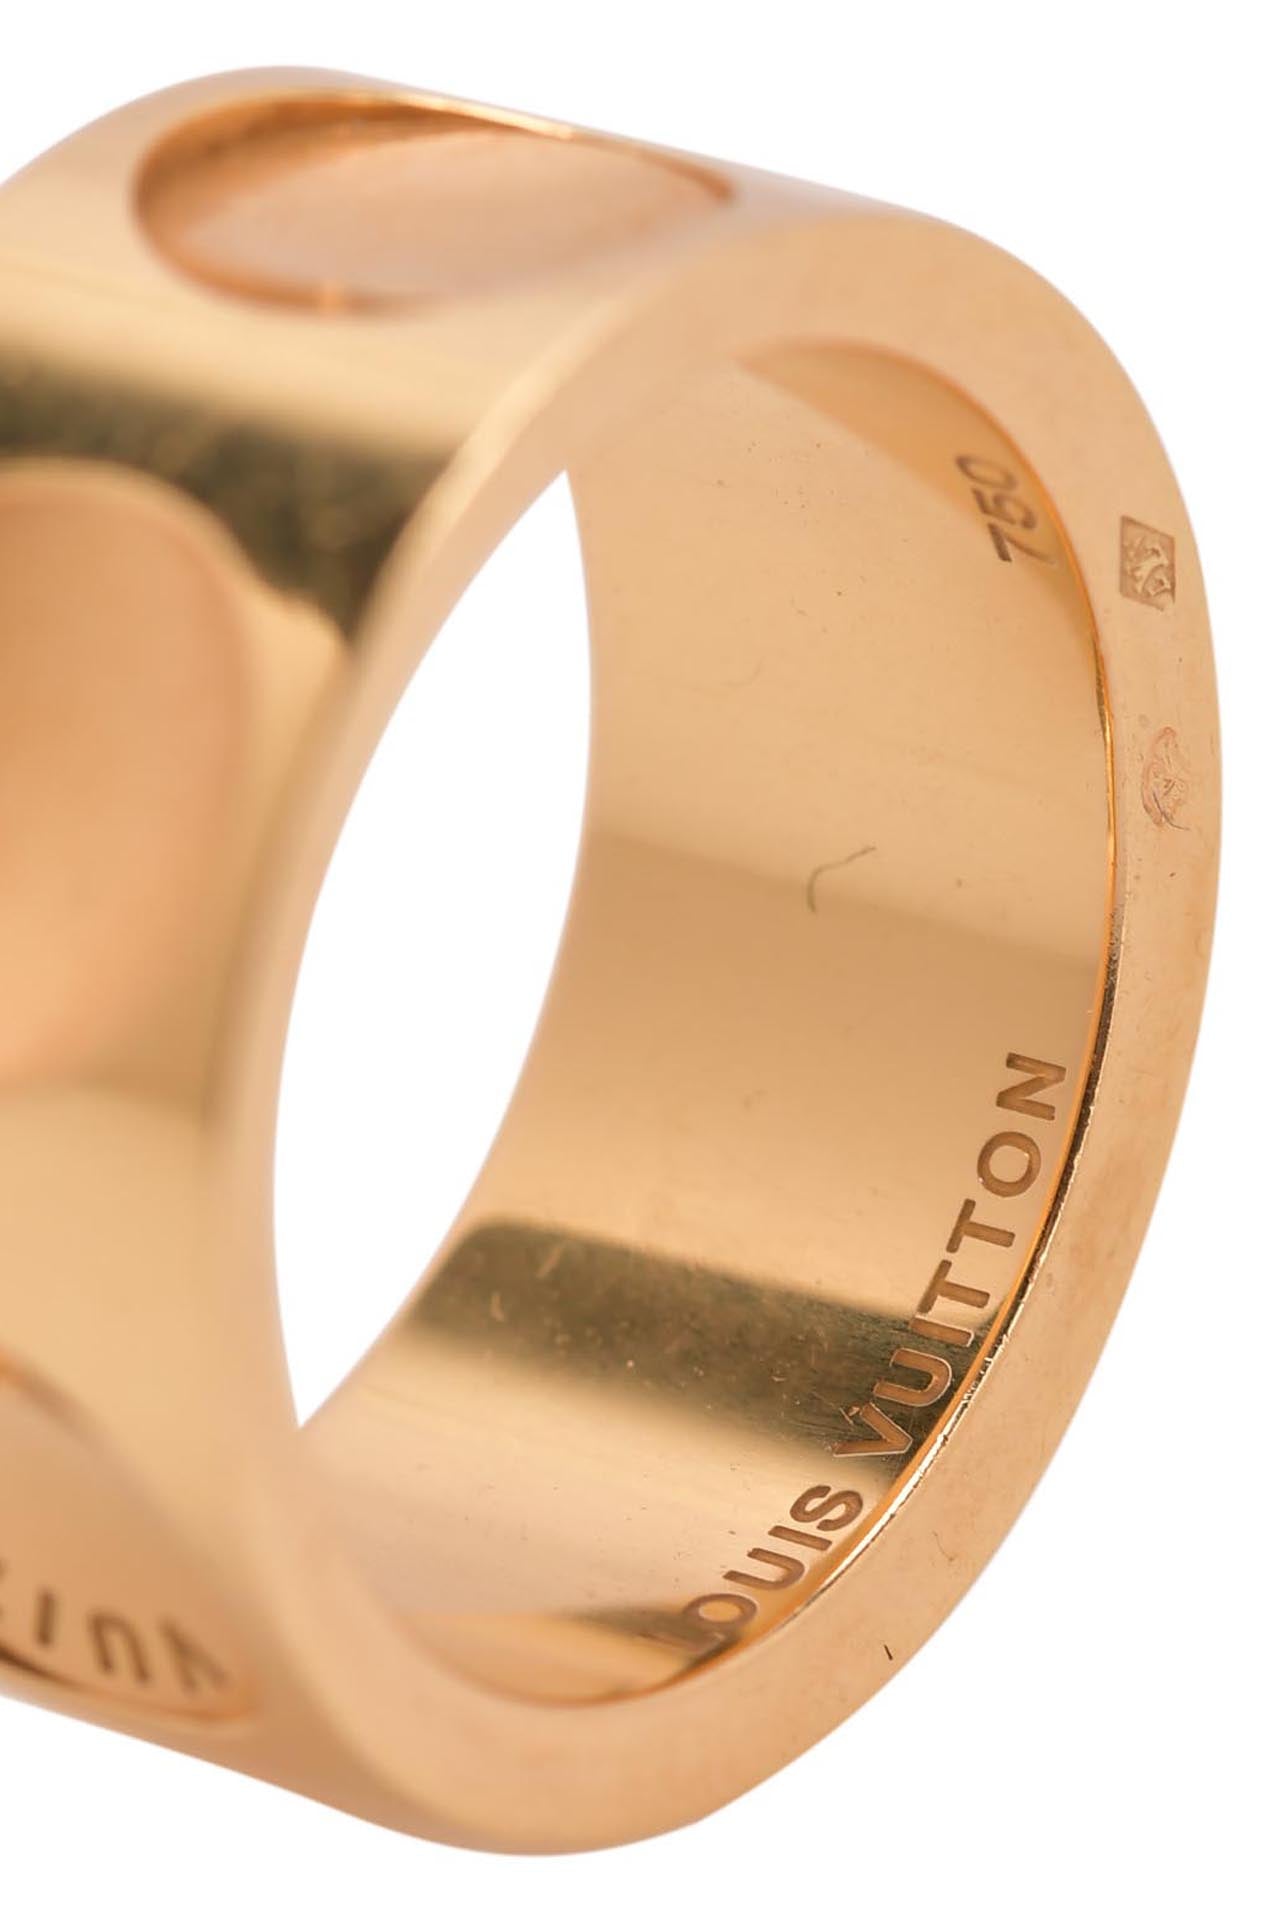 Louis Vuitton Empreinte 18K Yellow Gold Wide Band Ring